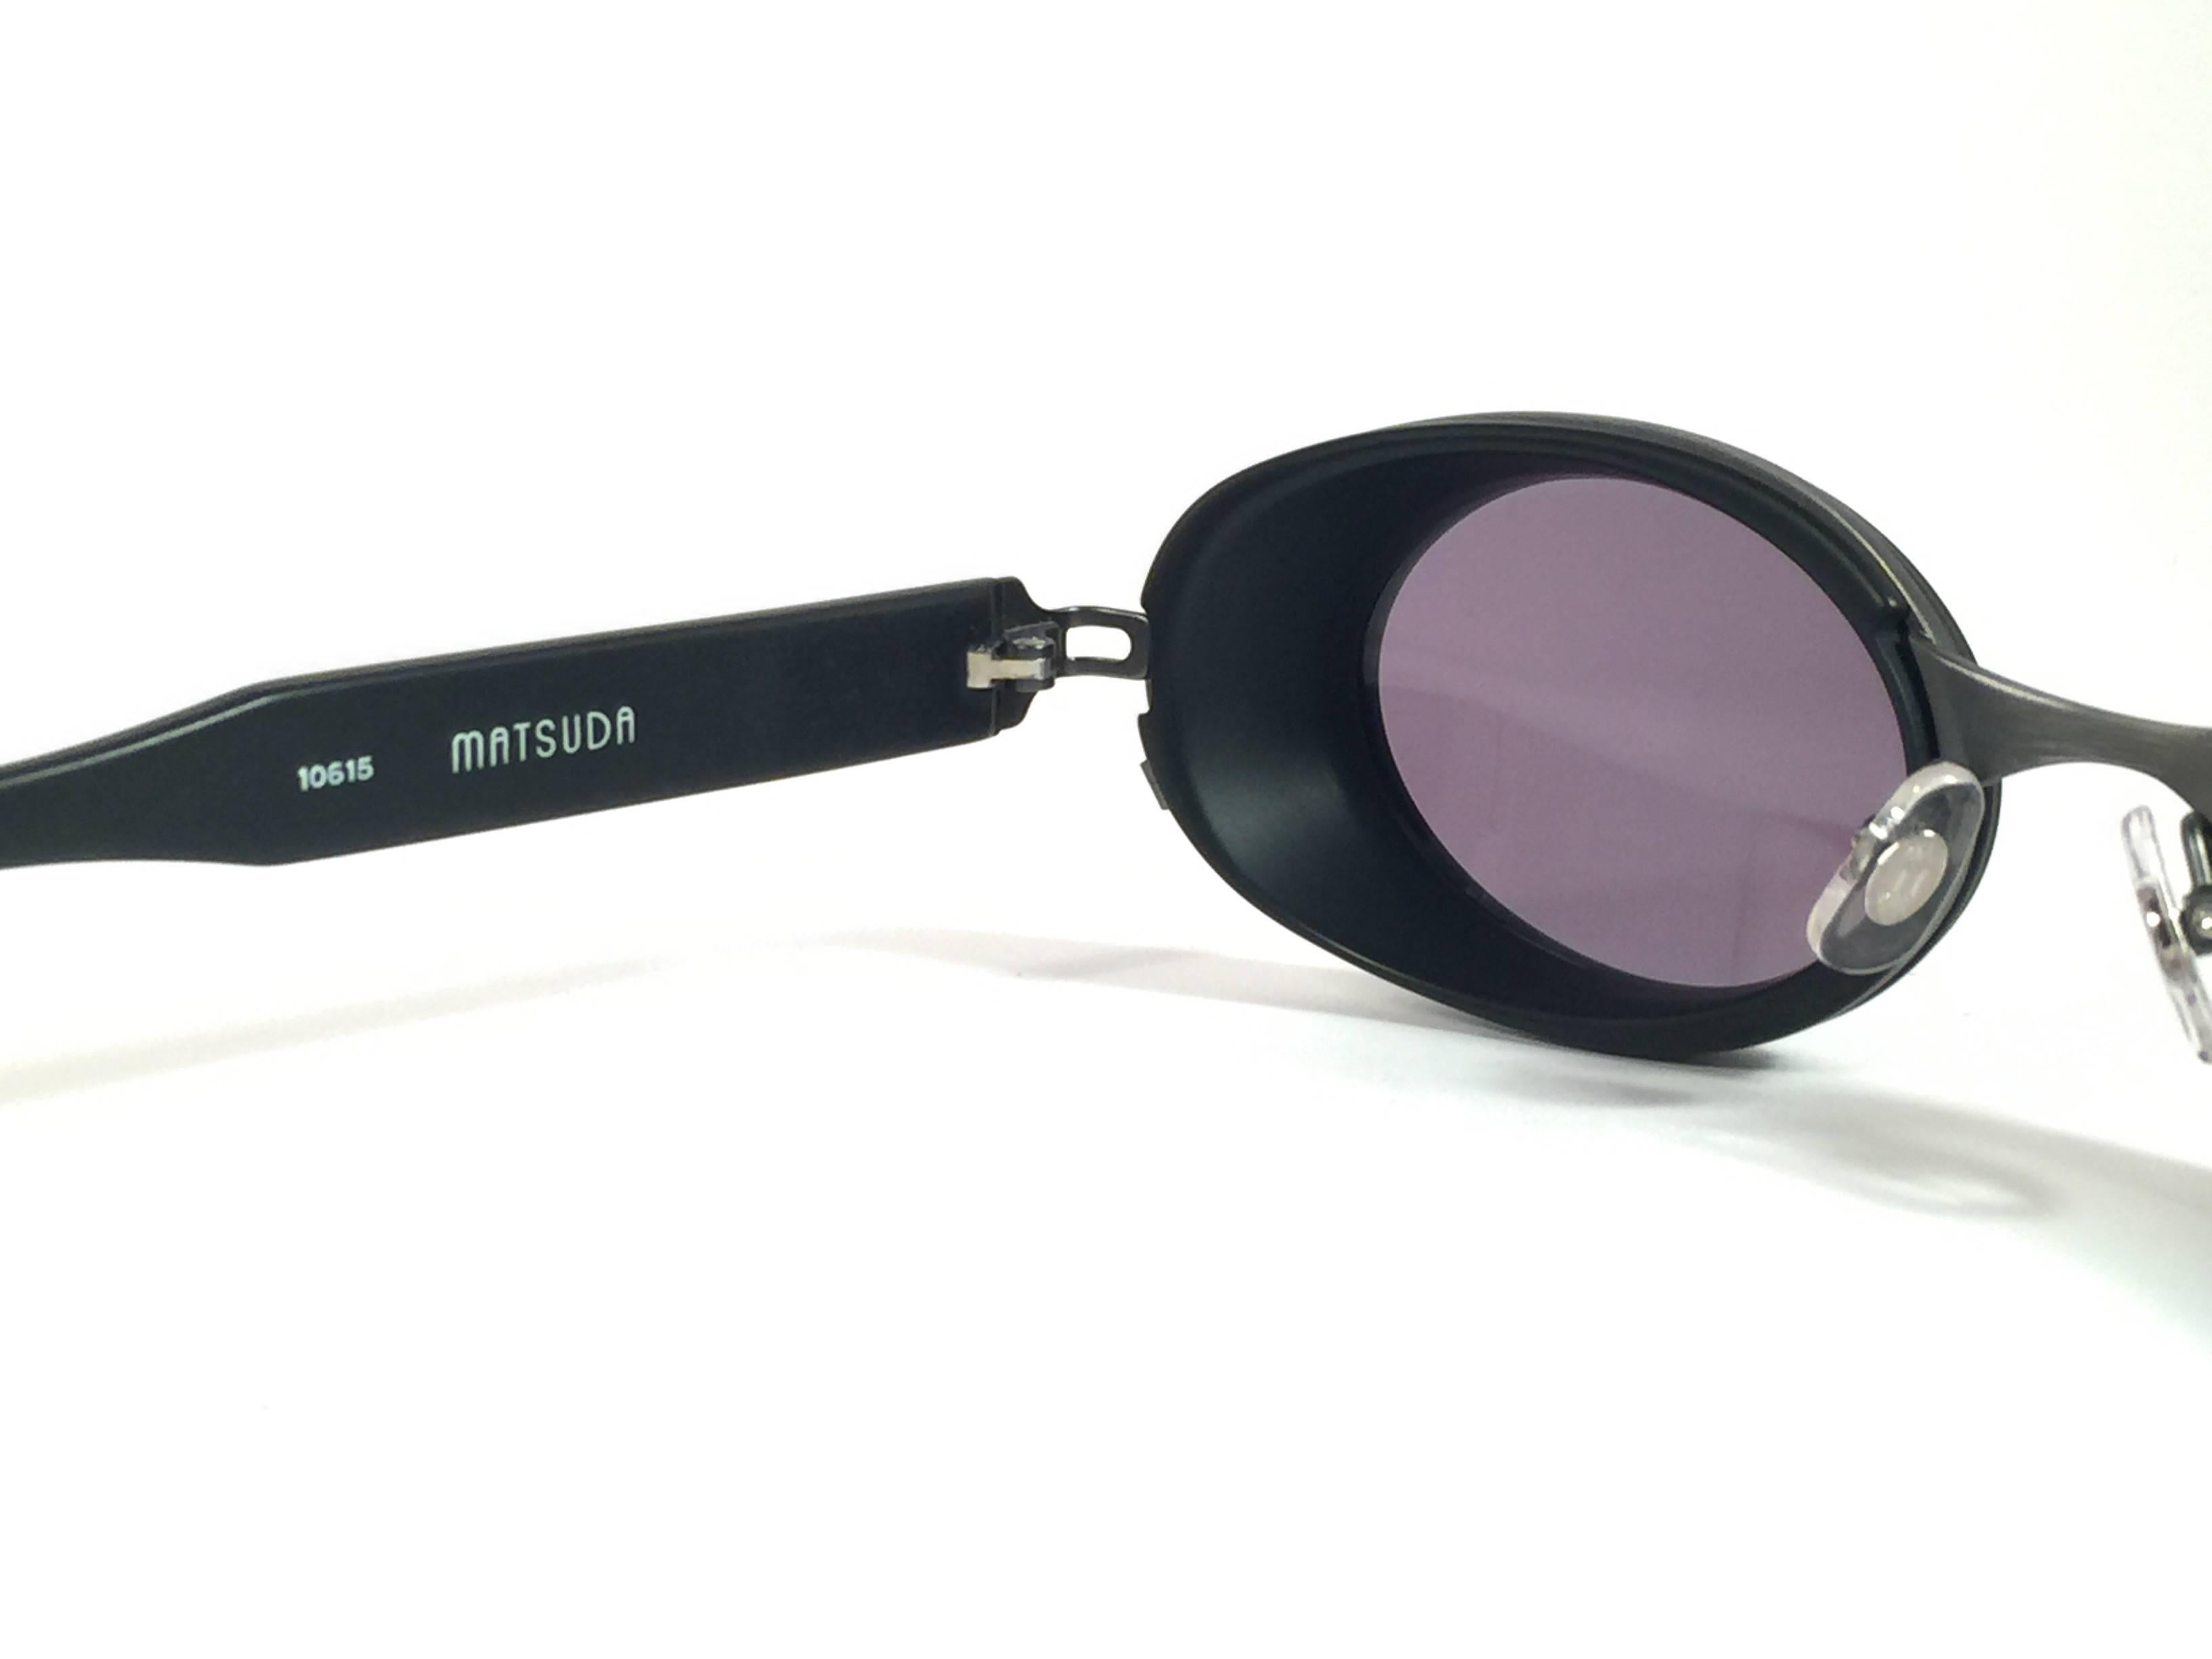 New Vintage Matsuda 10615 Black Matte Oval 1990's Made in Japan Sunglasses 1